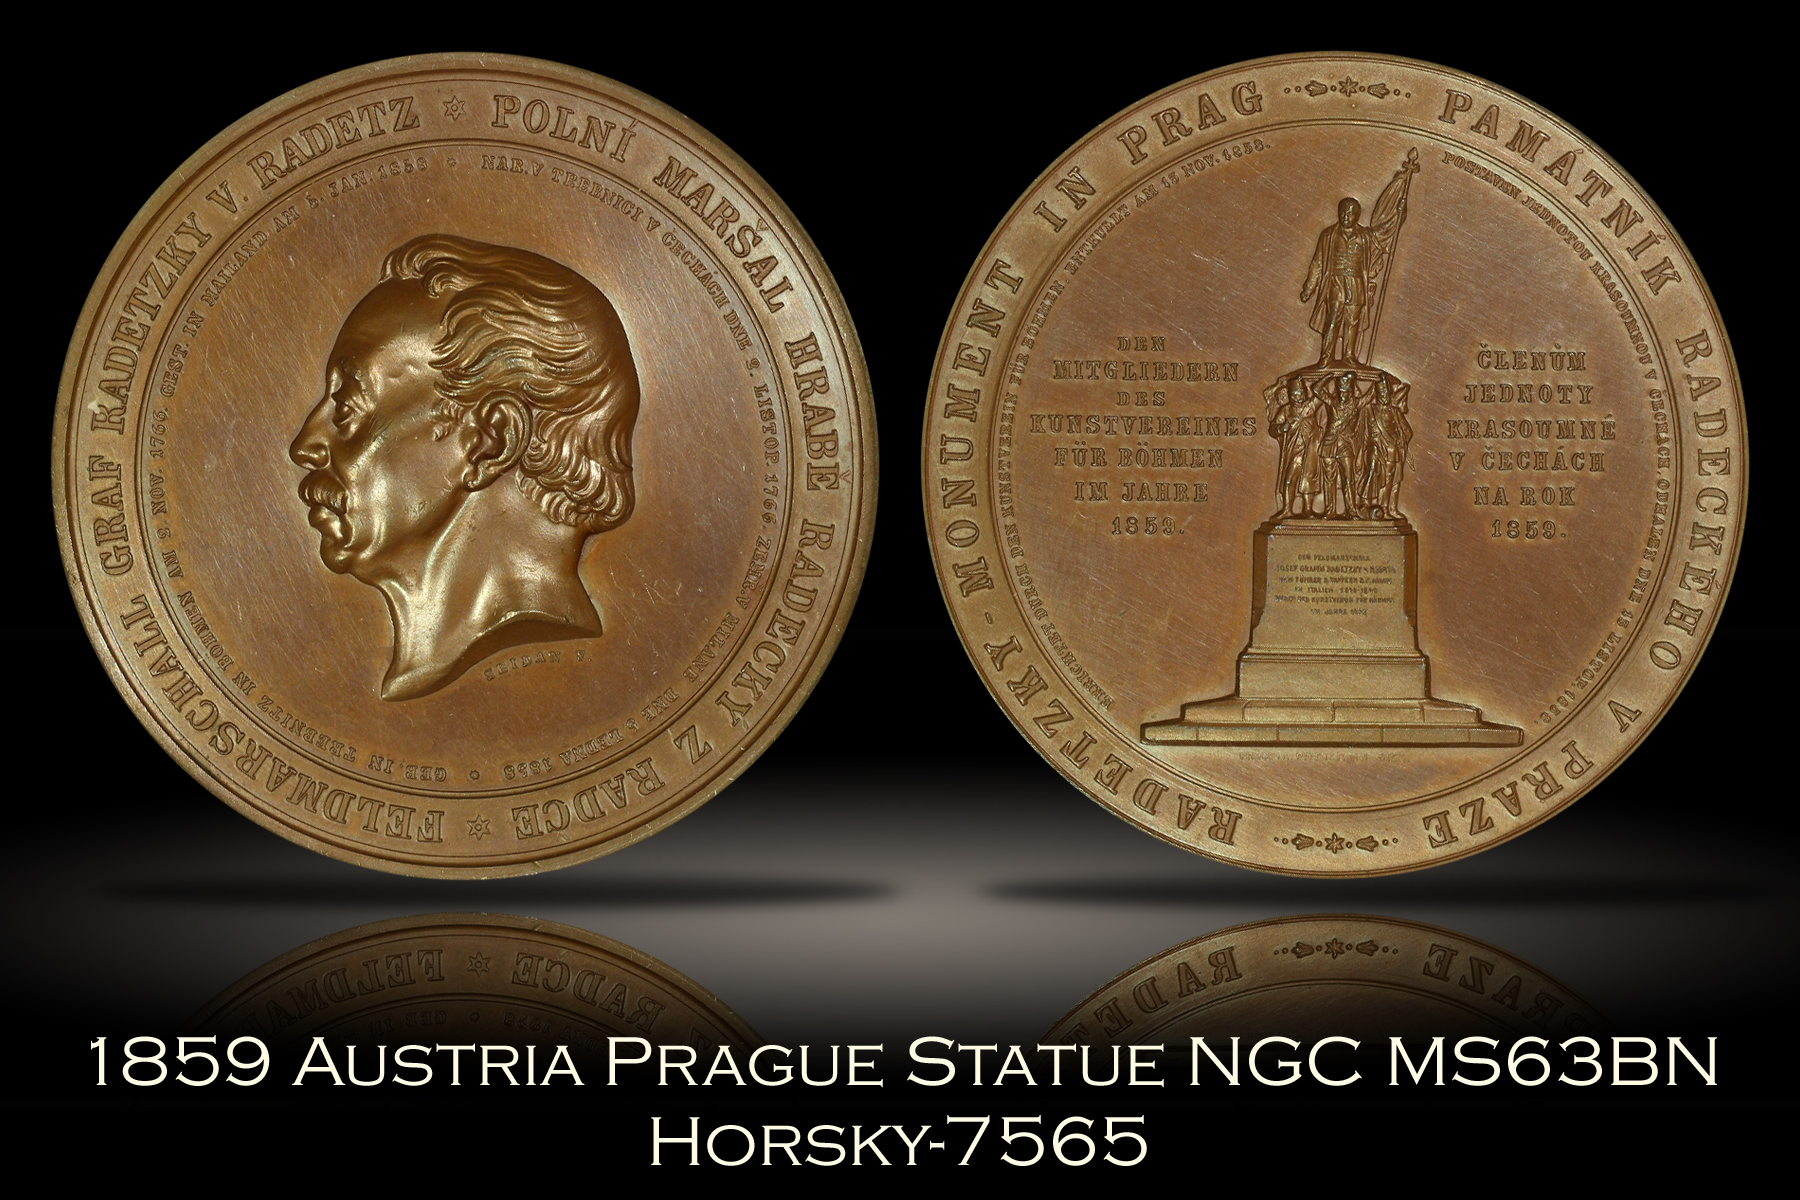 1859 Austria Statue in Prague Bronze Medal Horsky-7565 NGC MS63BN